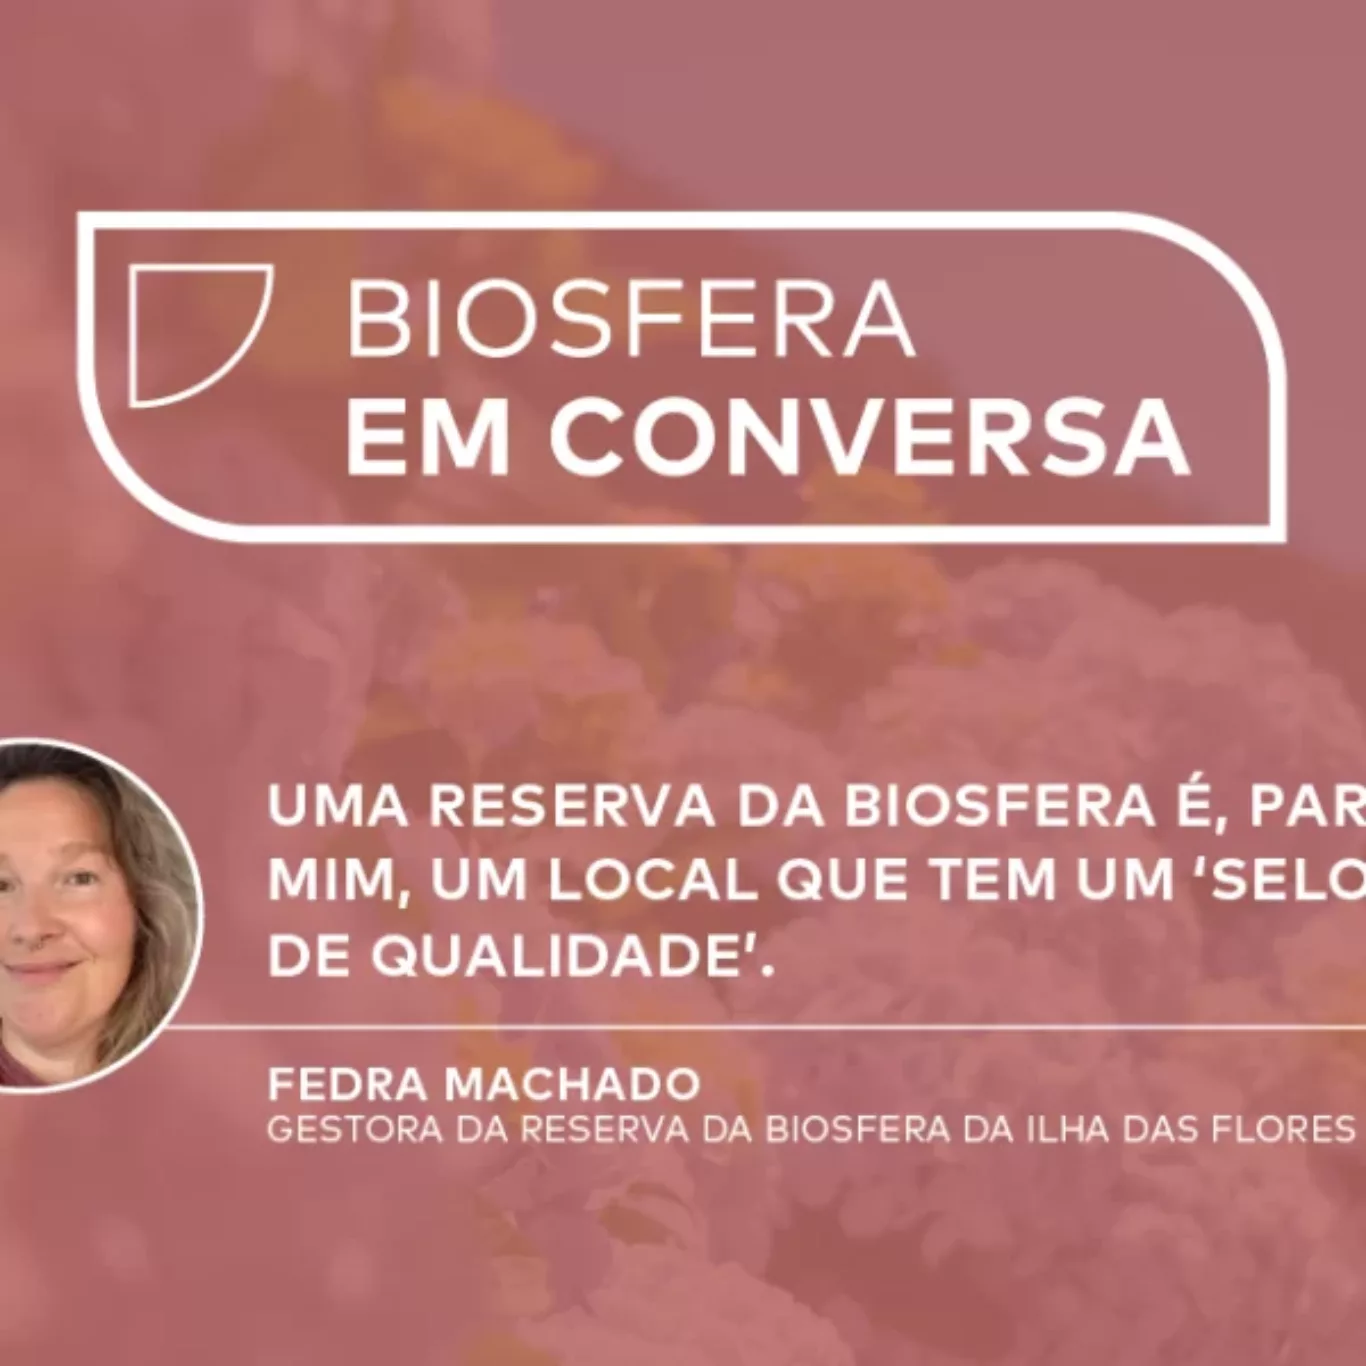 Biosfera em Conversa: Fedra Machado, Reserva da Biosfera da Ilha das Flores